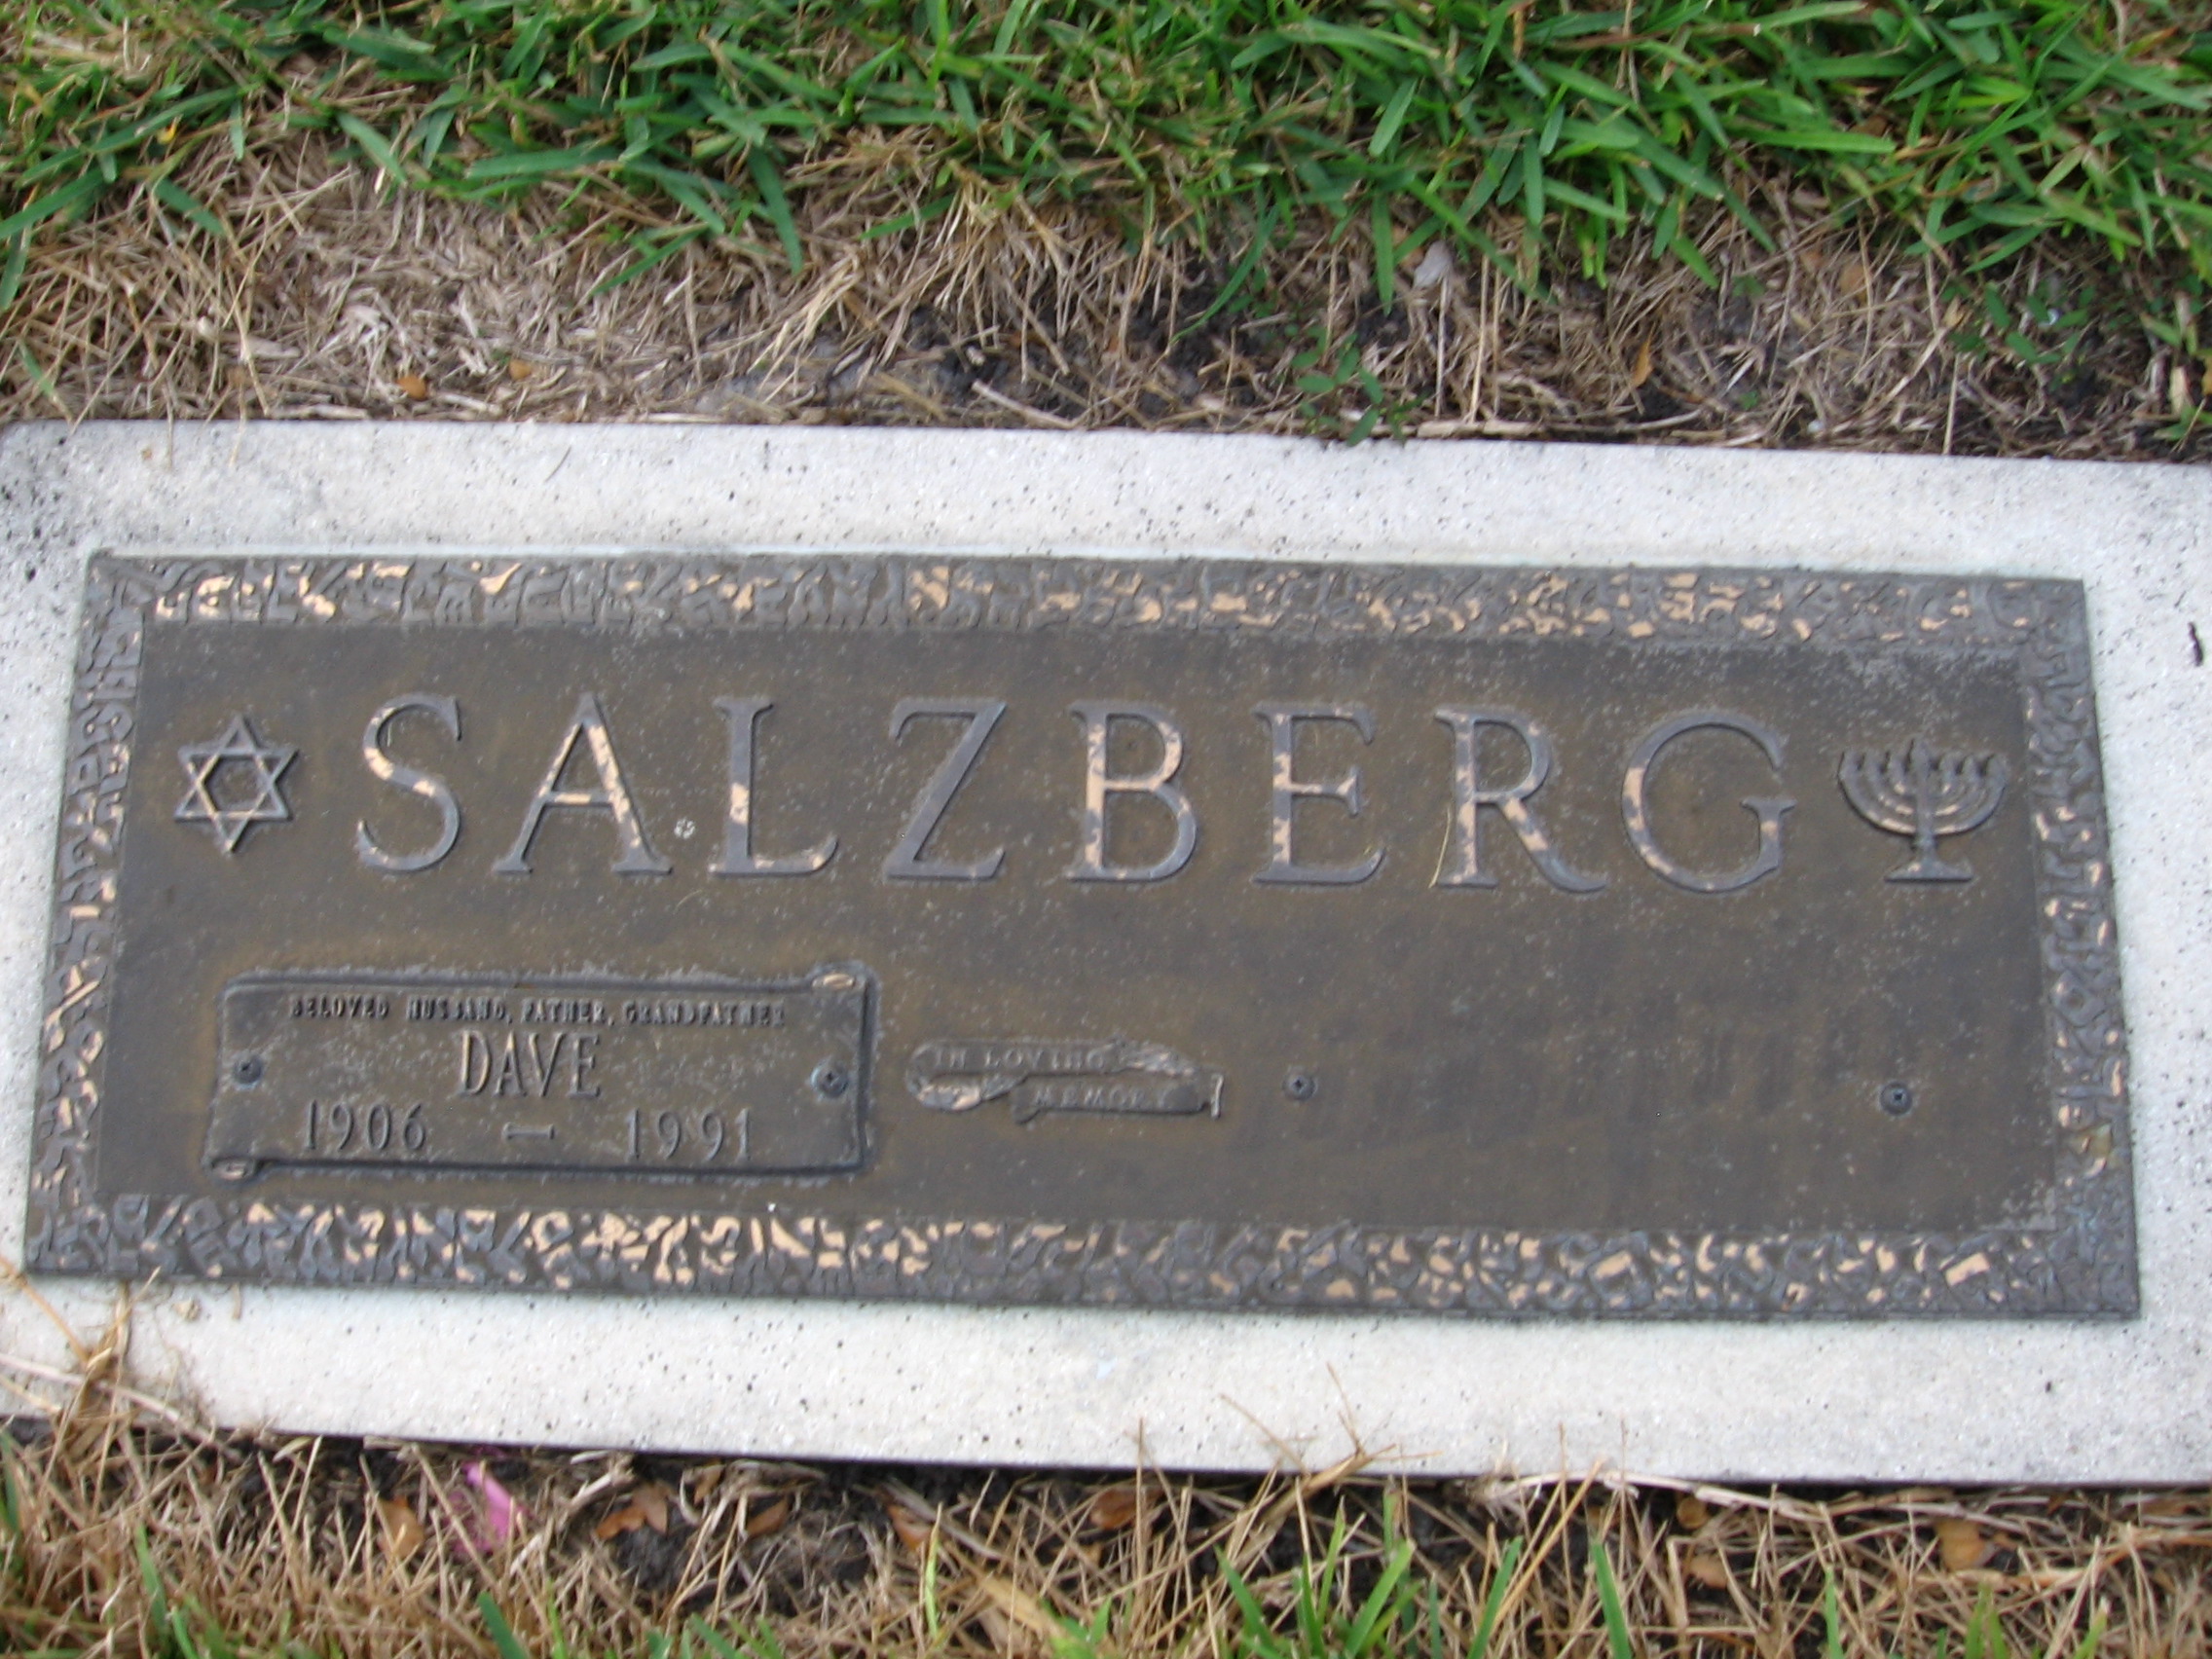 Dave Salzberg